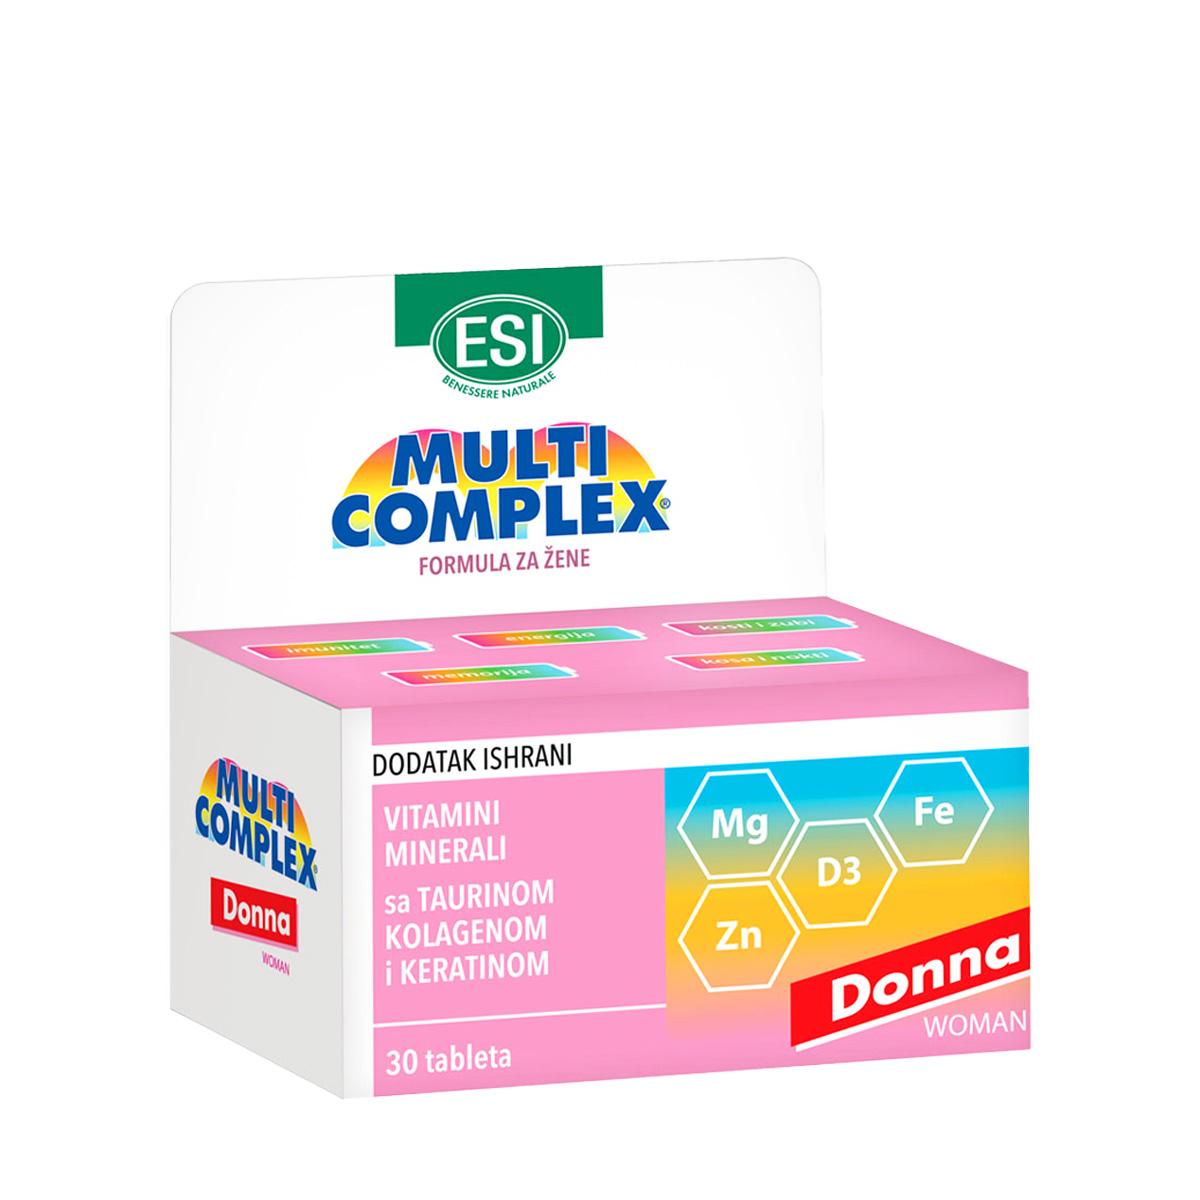 ESI Multikompleks vitamina i minerala za žene Donna 30 tableta 104279.0